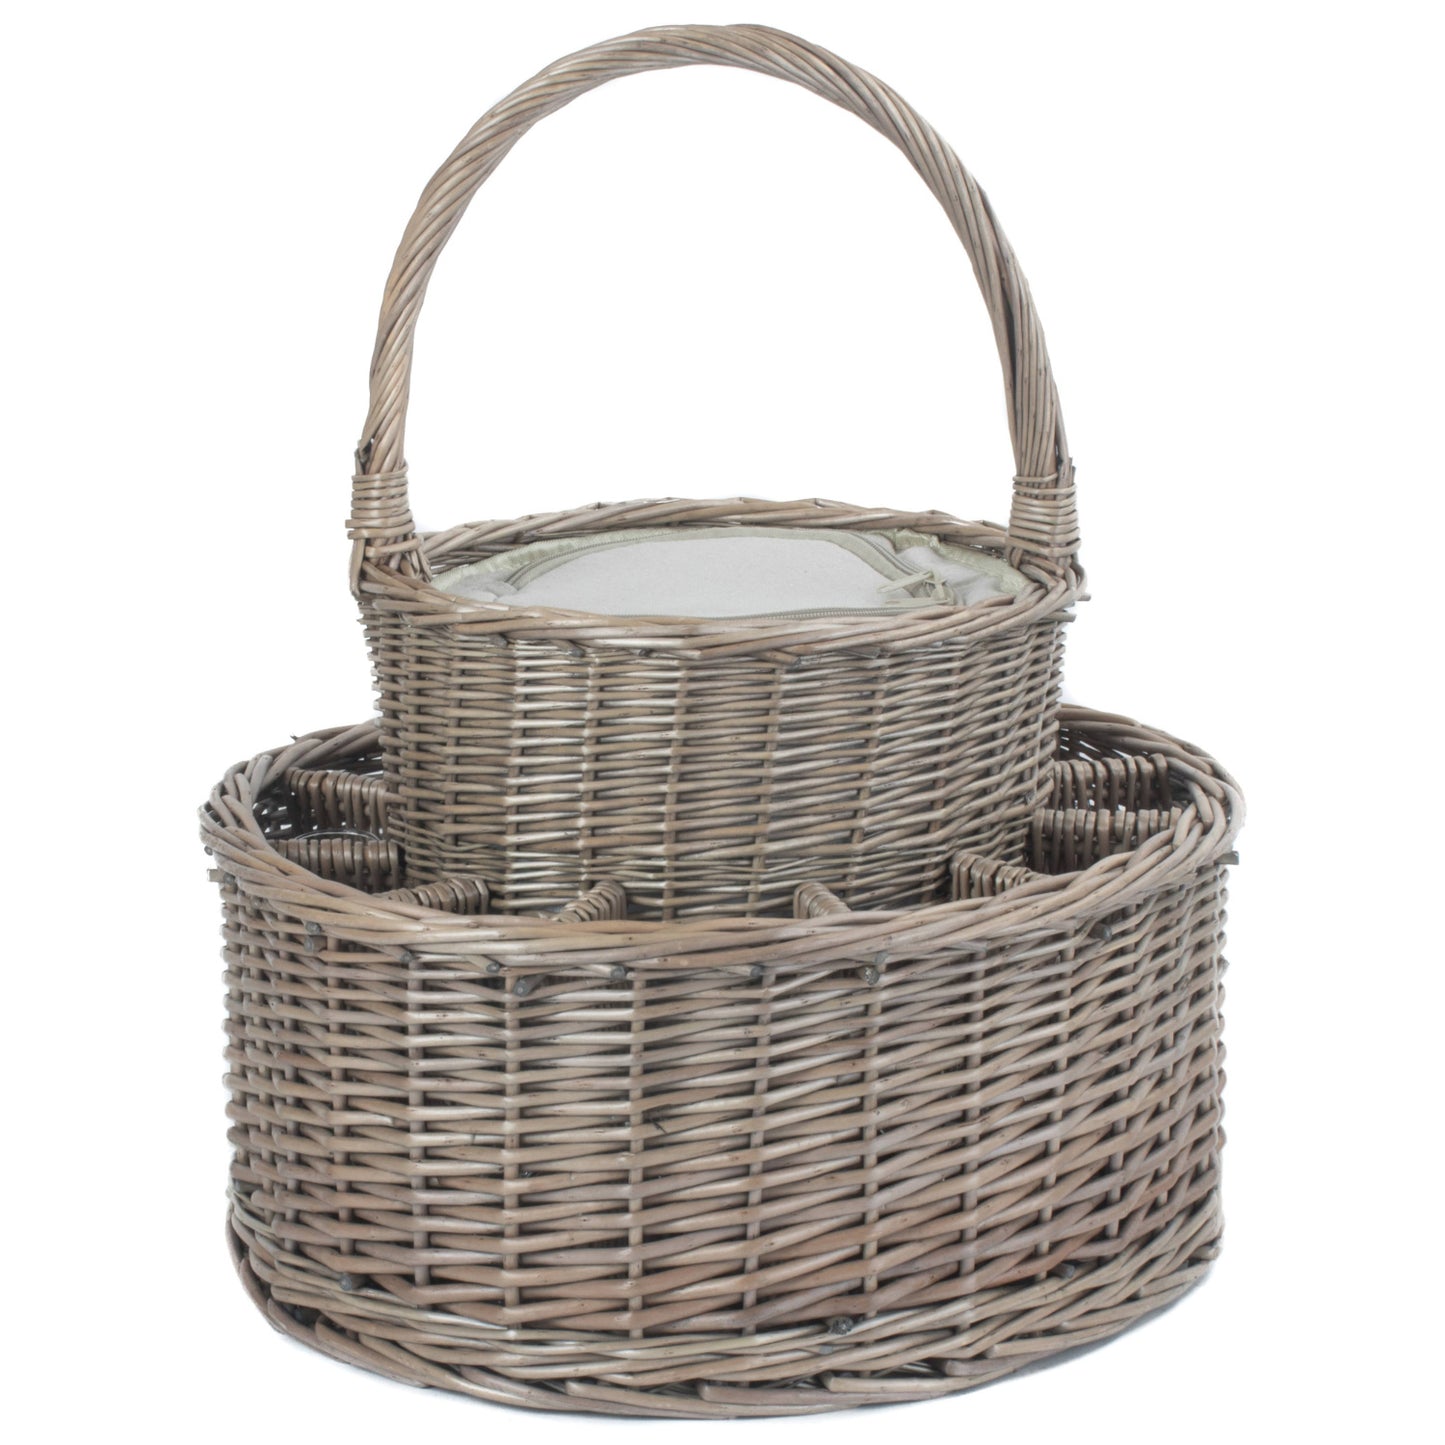 Chilled Garden Party Basket